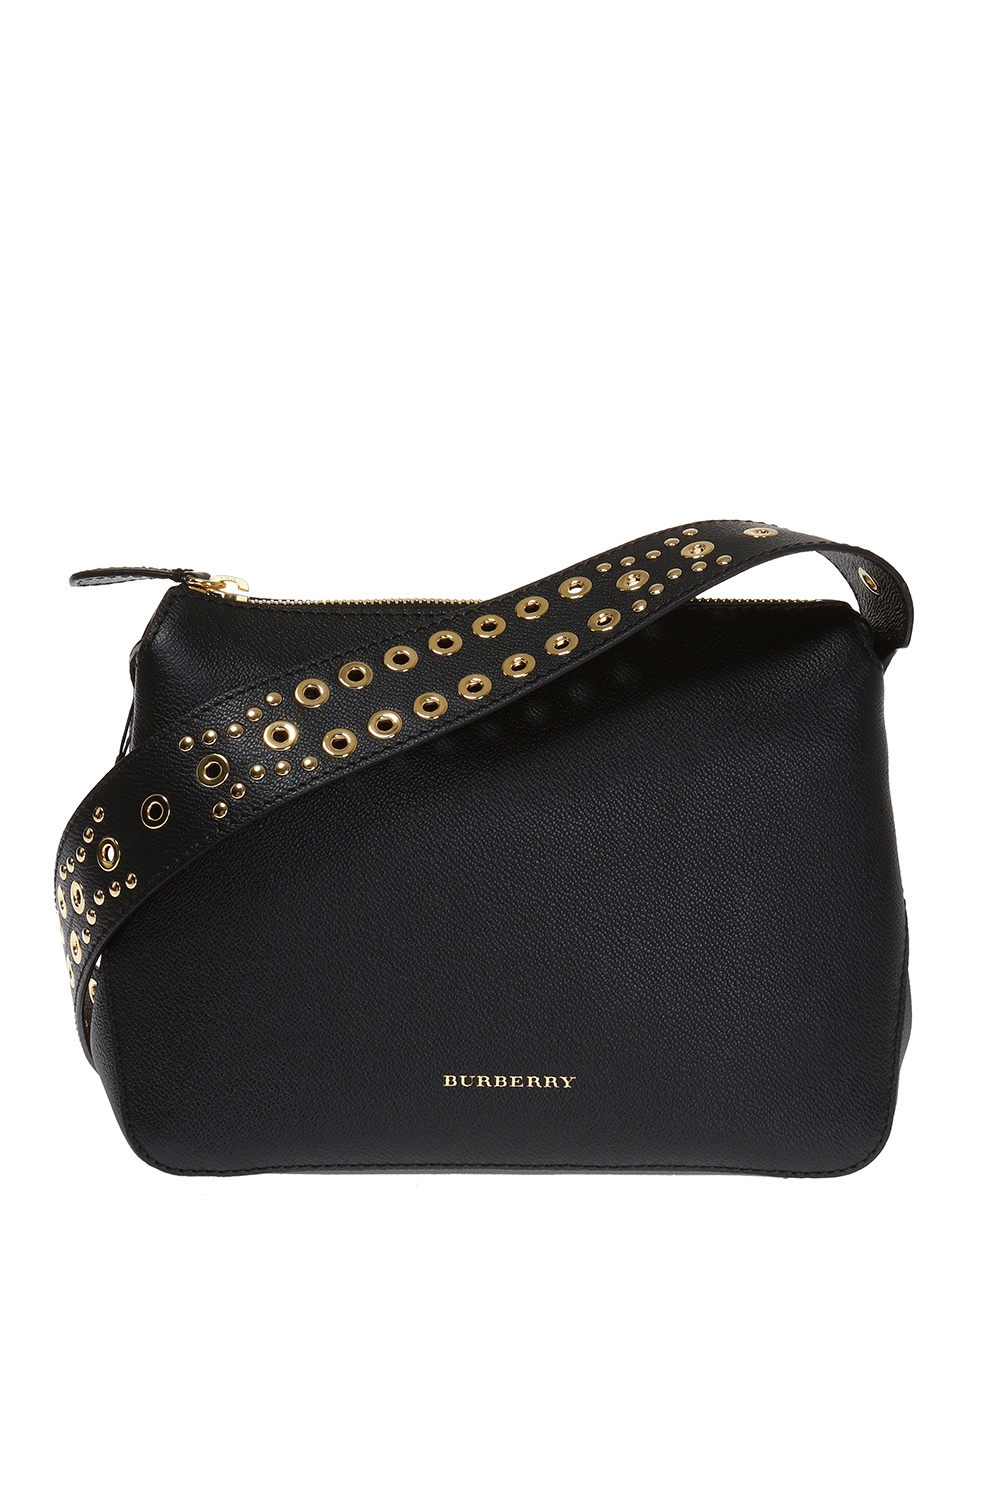 Burberry 'Helmsley' shoulder bag | Women's Bags | Vitkac